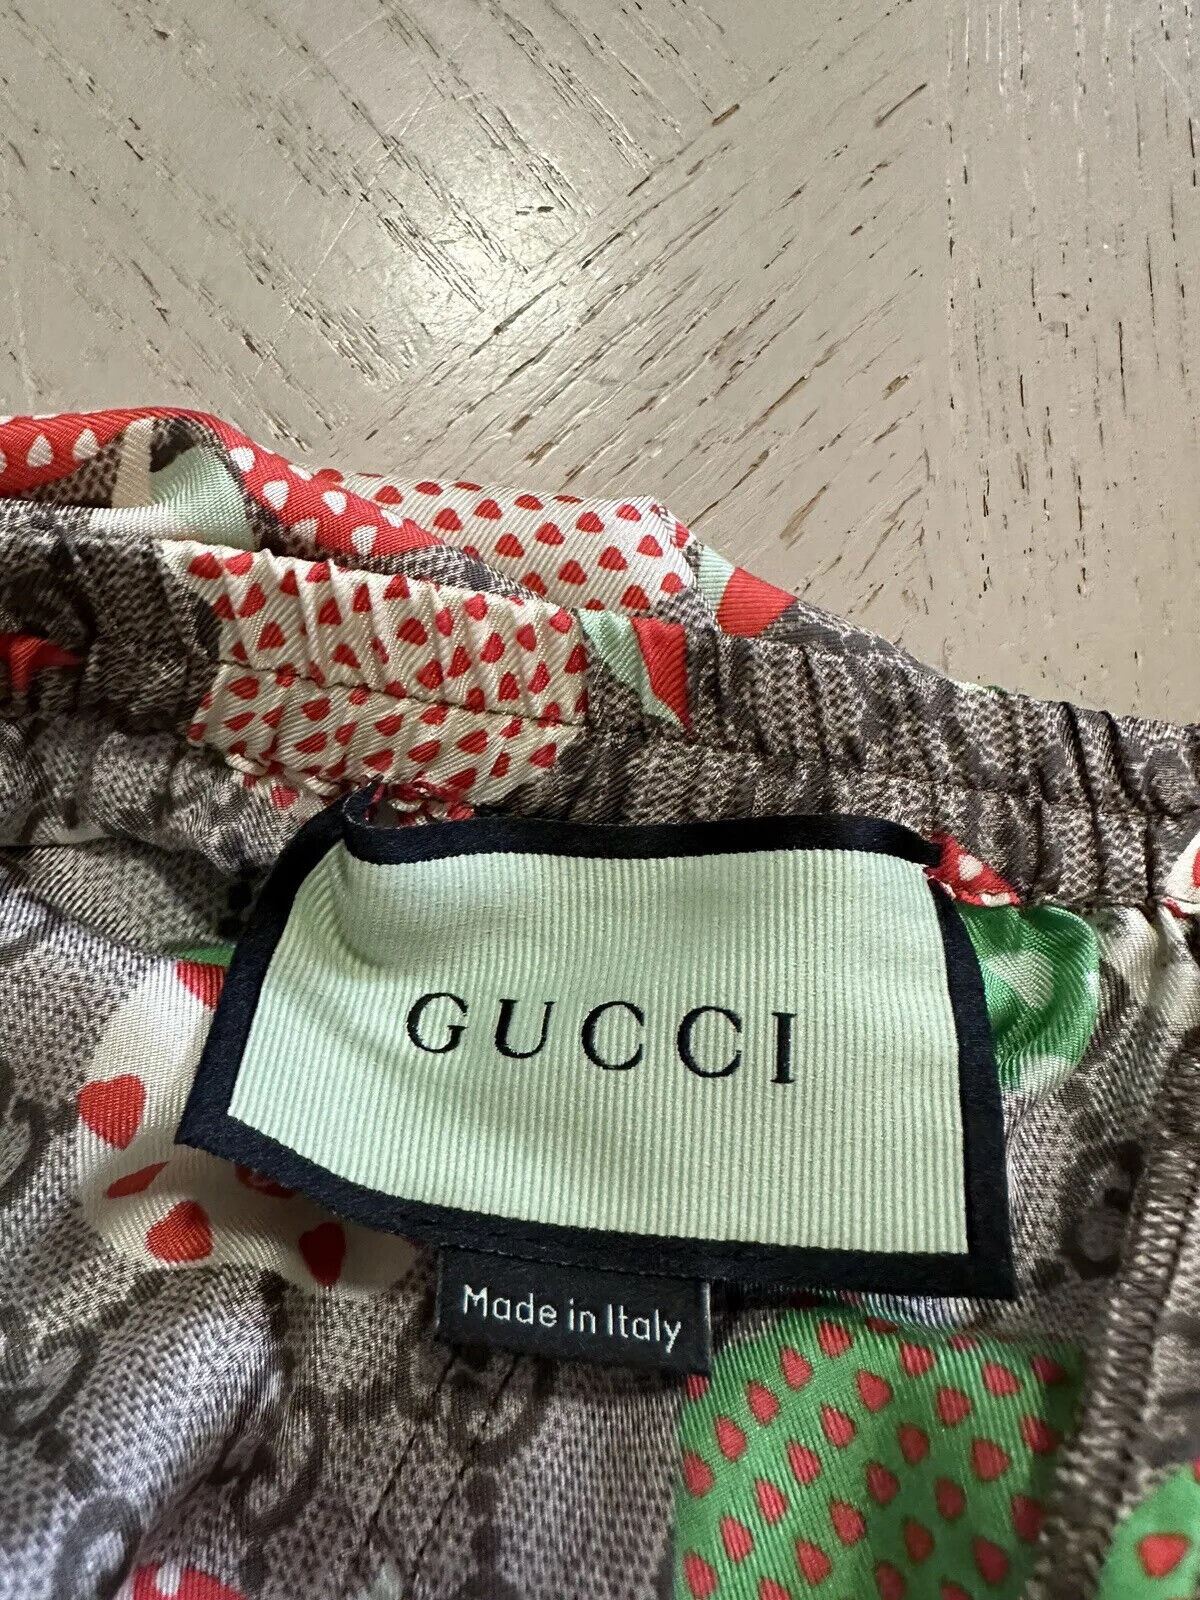 NWT $1300 Gucci Men’s GG Monogram Silk Short Pants Camel/Red/MK 30 US/46 Eu